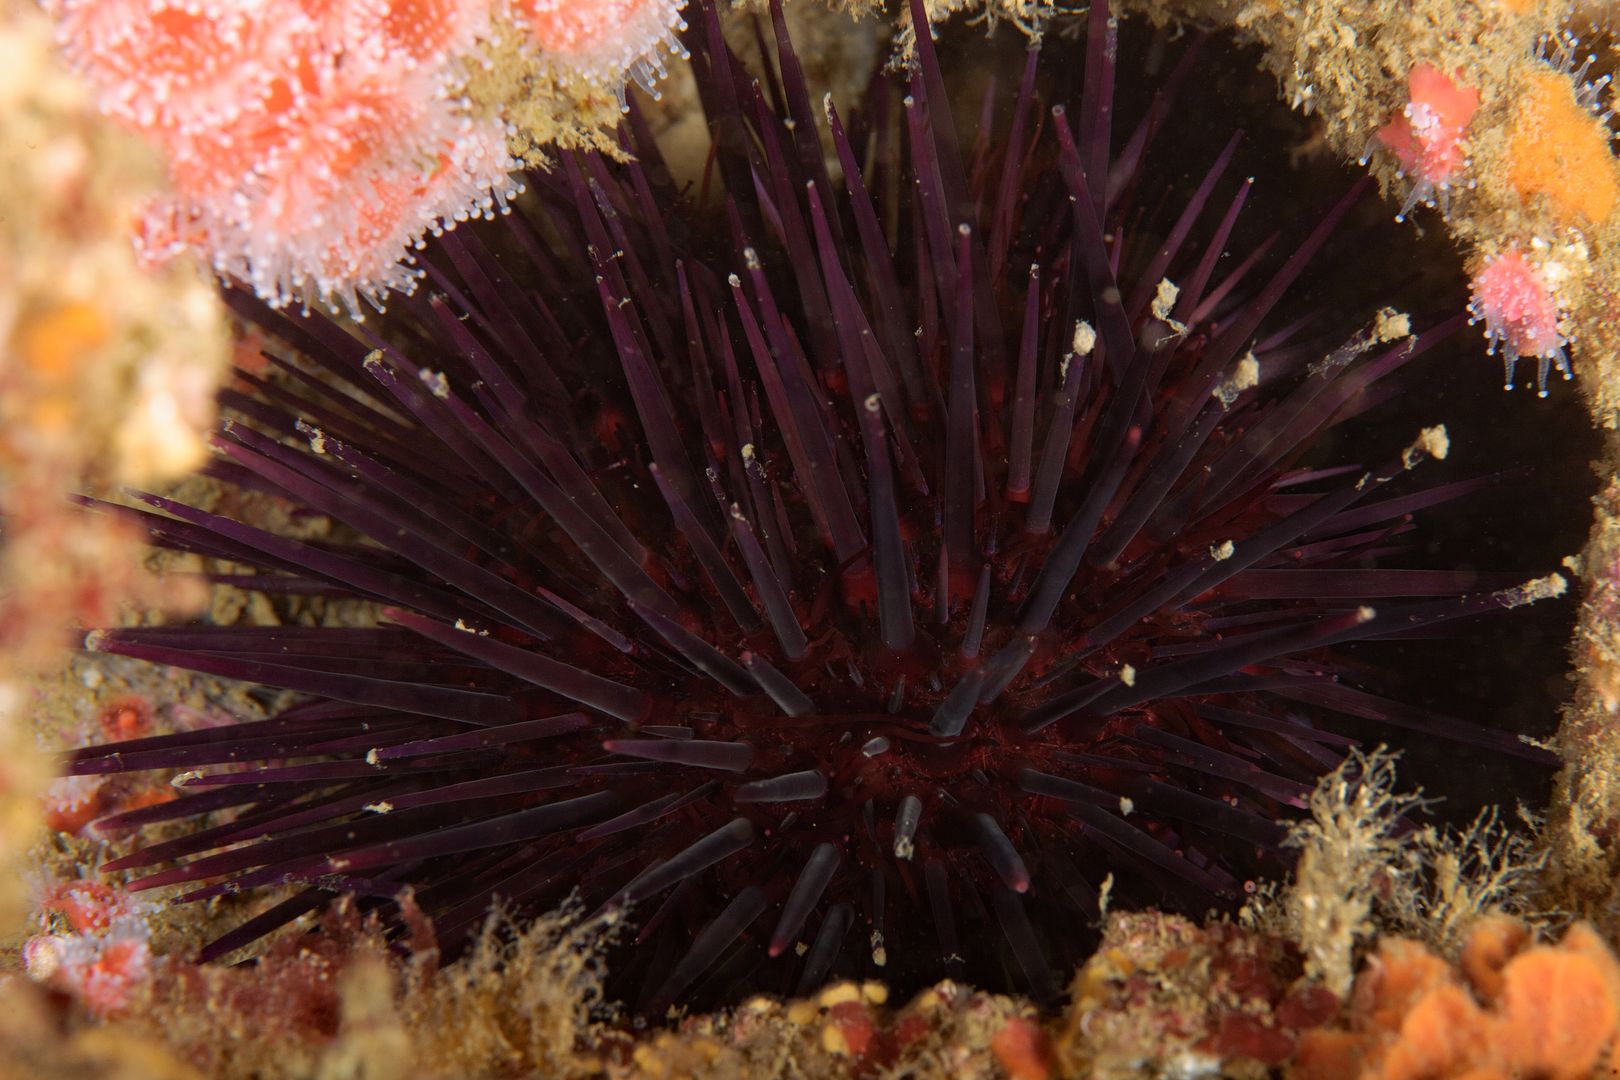  photo Mesocentrotus franciscanus Red sea urchin_ART8179_zps4dekje8m.jpg